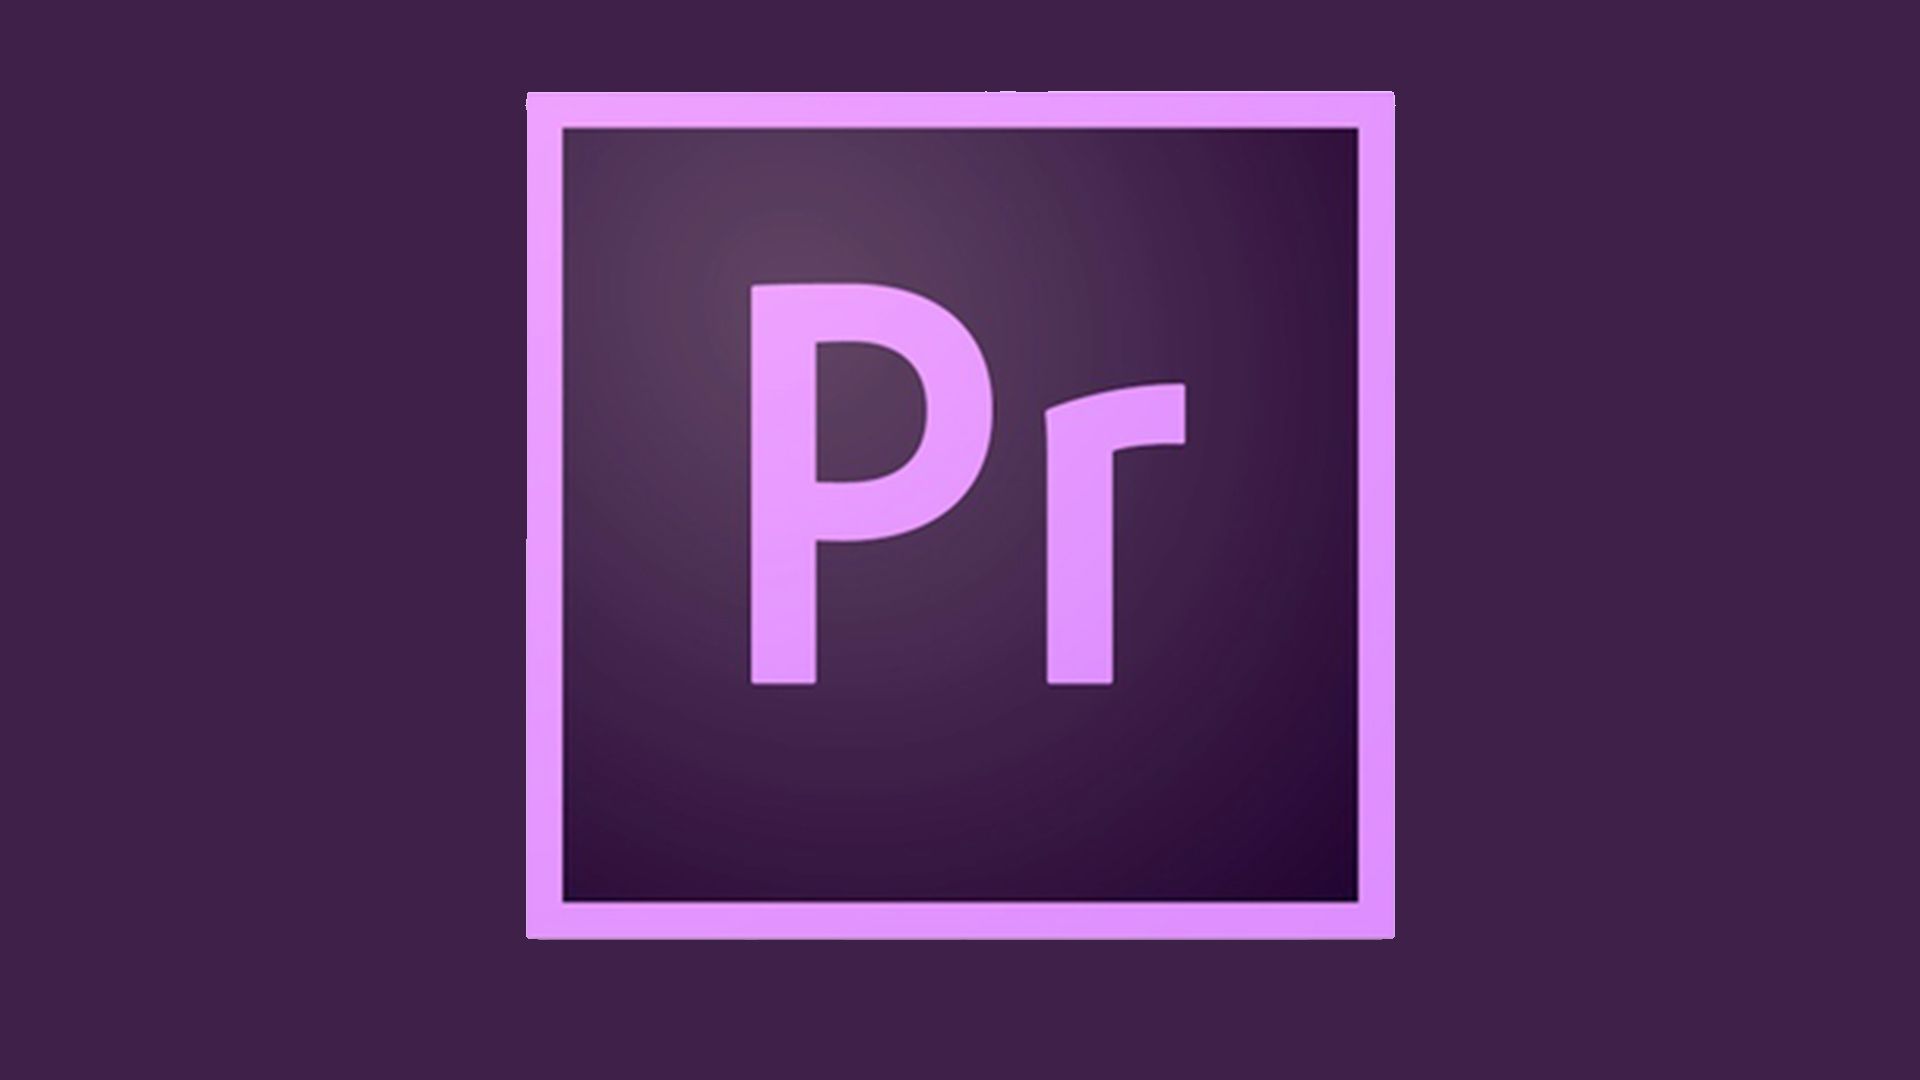 Adobe Premiere Pro Wallpaper .hipwallpaper.com